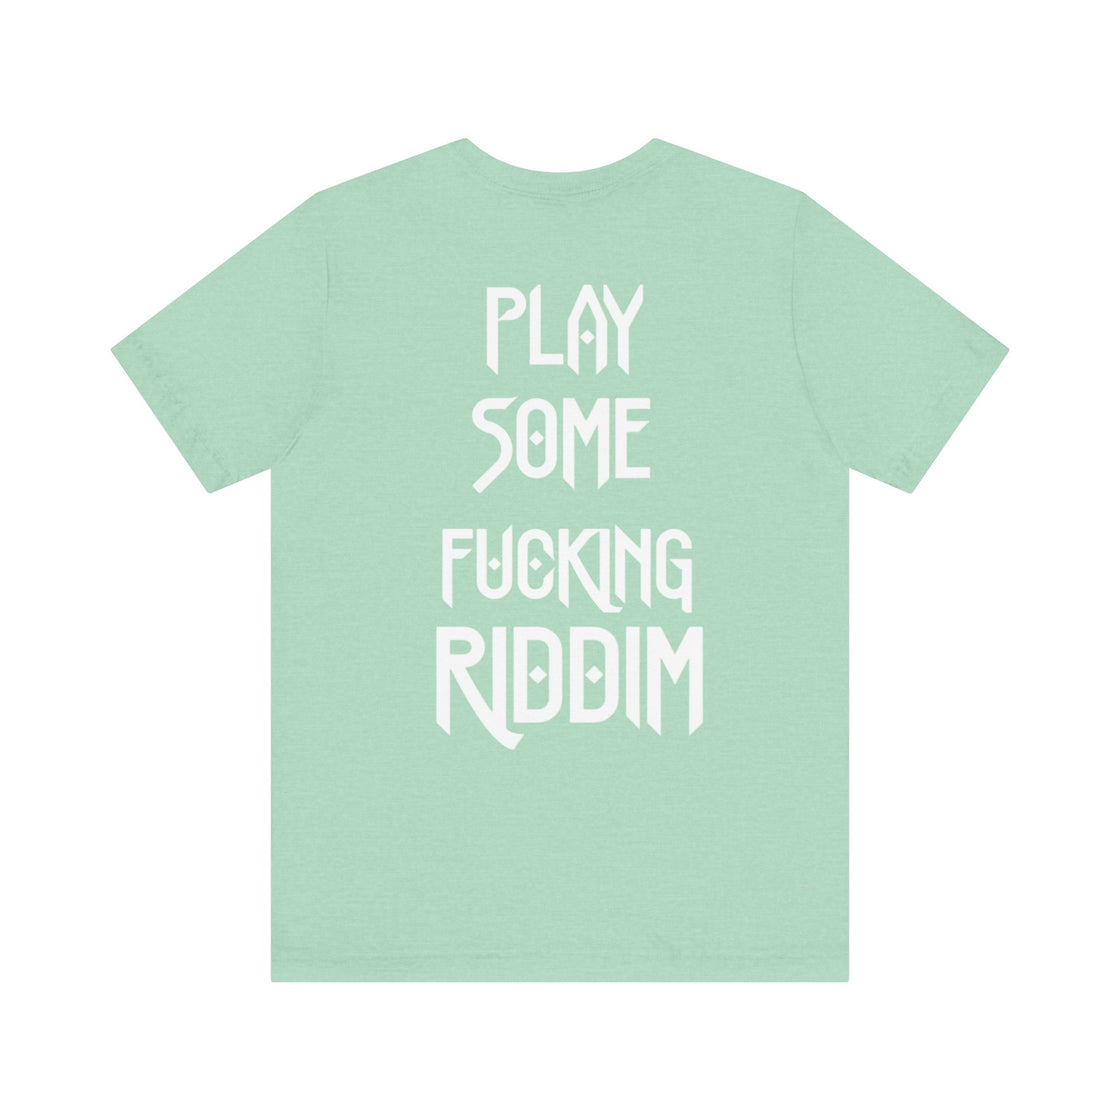 Play Some Riddim T-Shirt - Rave T-shirt, Music Festival T-shirt, Rave Shirt For Men, EDM Shirt, Rave Merch, Unisex Rave Shirt